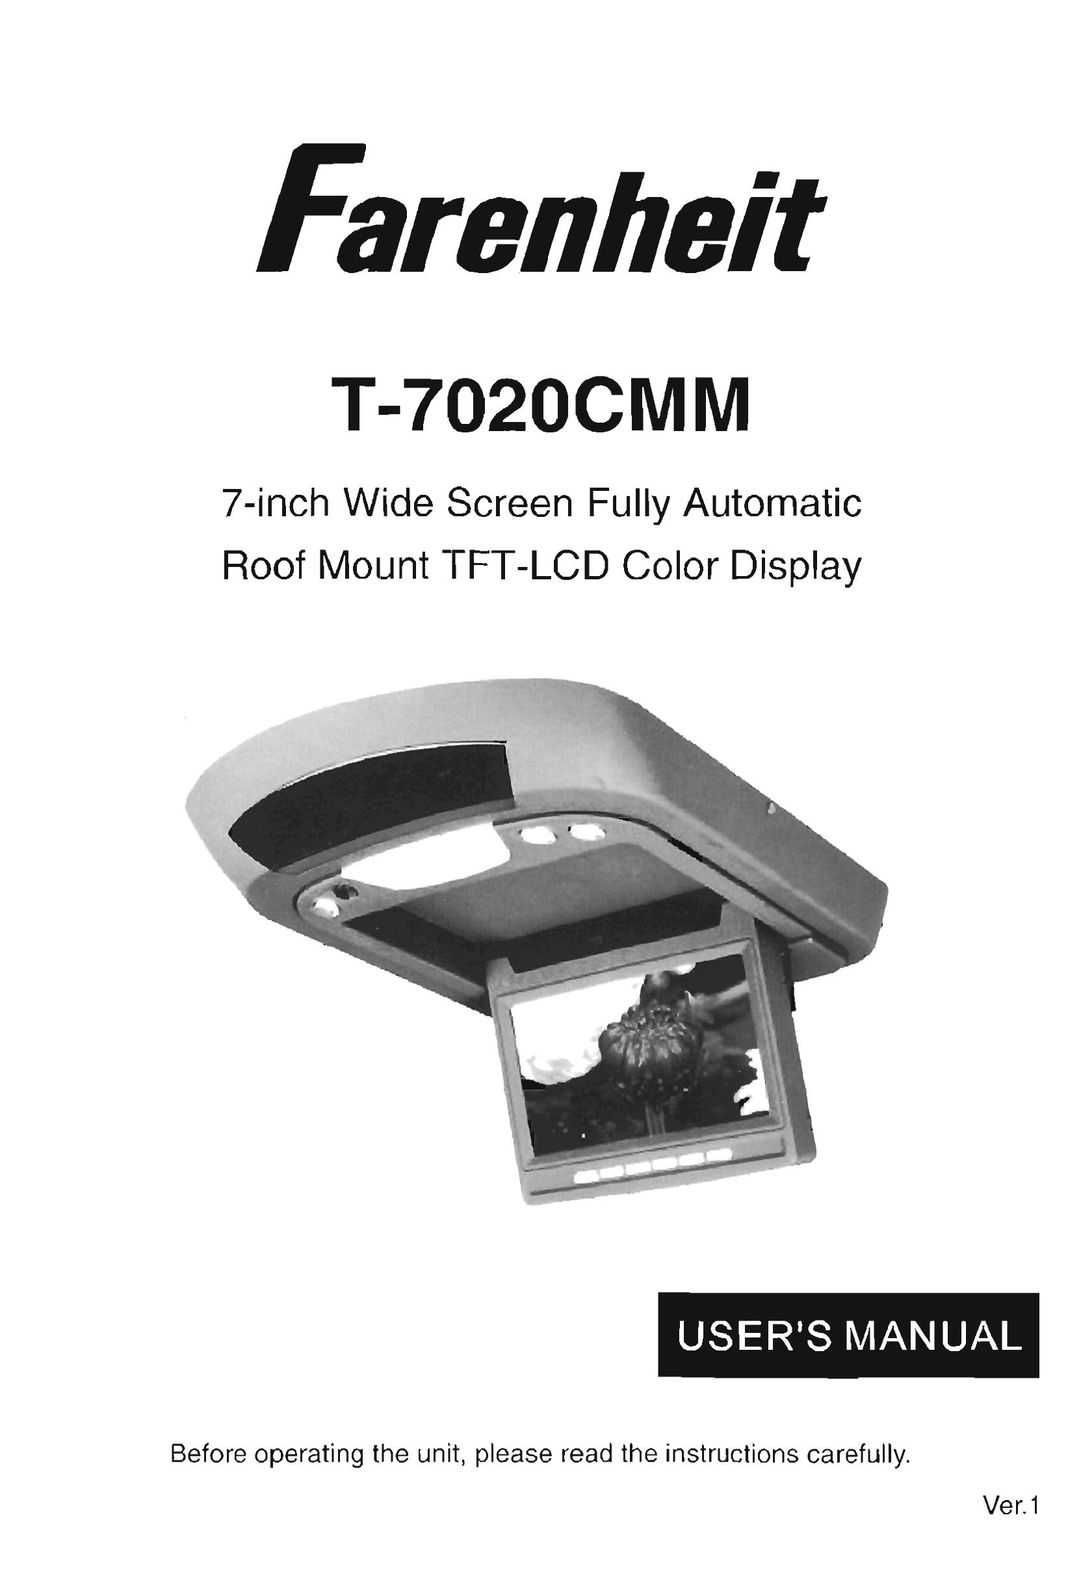 Farenheit Technologies T-7020CMM Car Video System User Manual